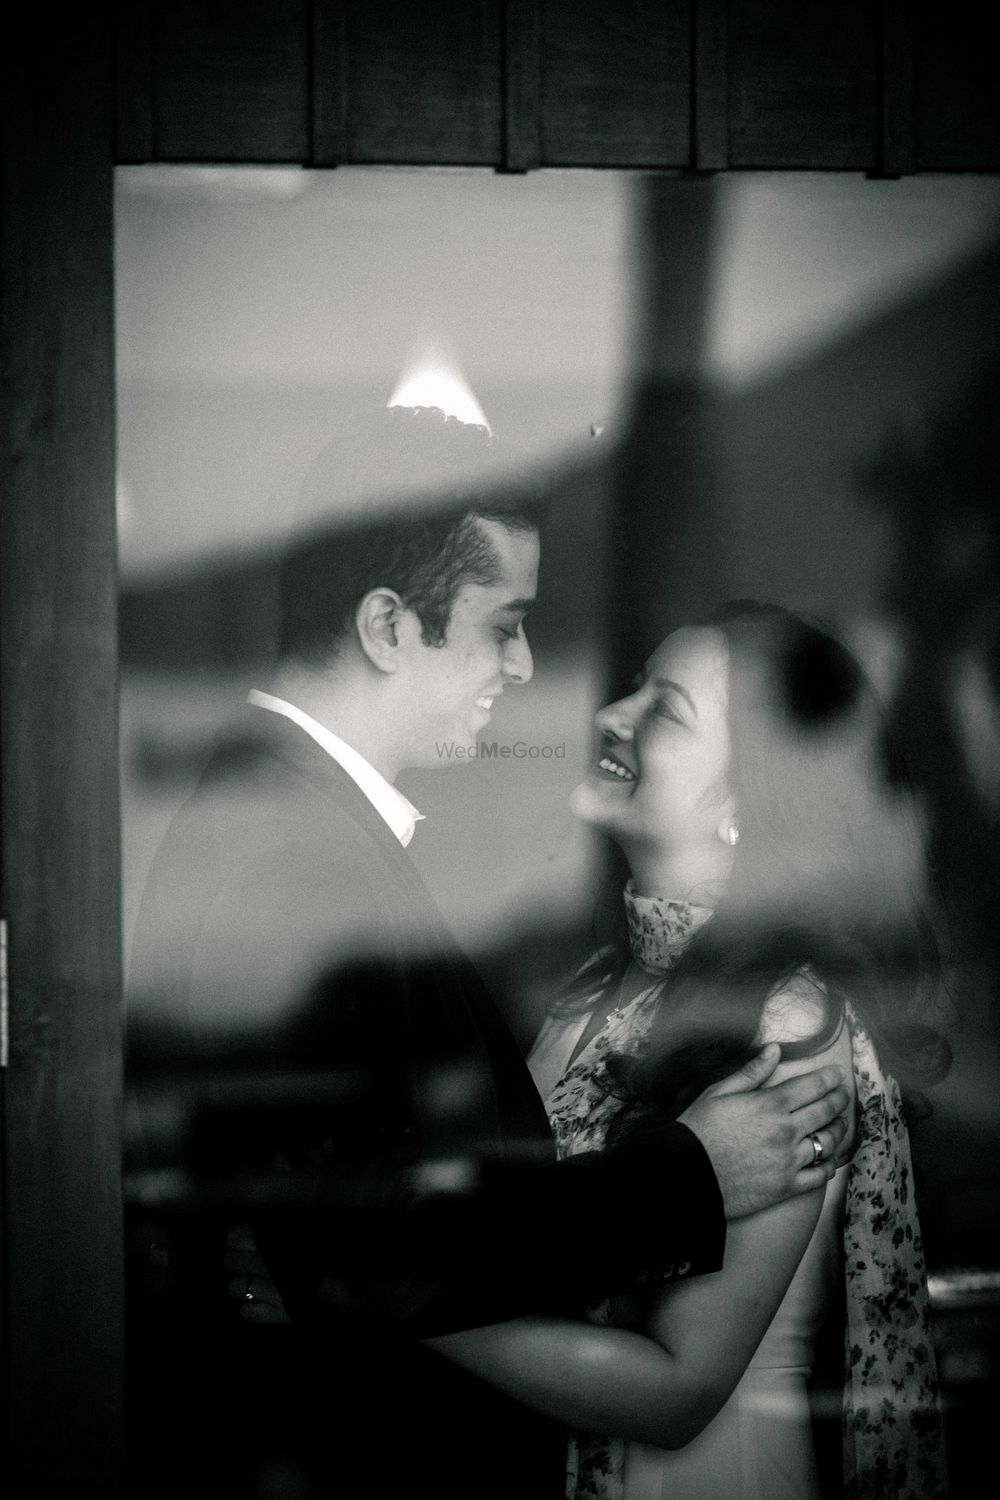 Photo From Pre-Wed | Akshay+Damayanti - By Sandeep Gadhvi Photography